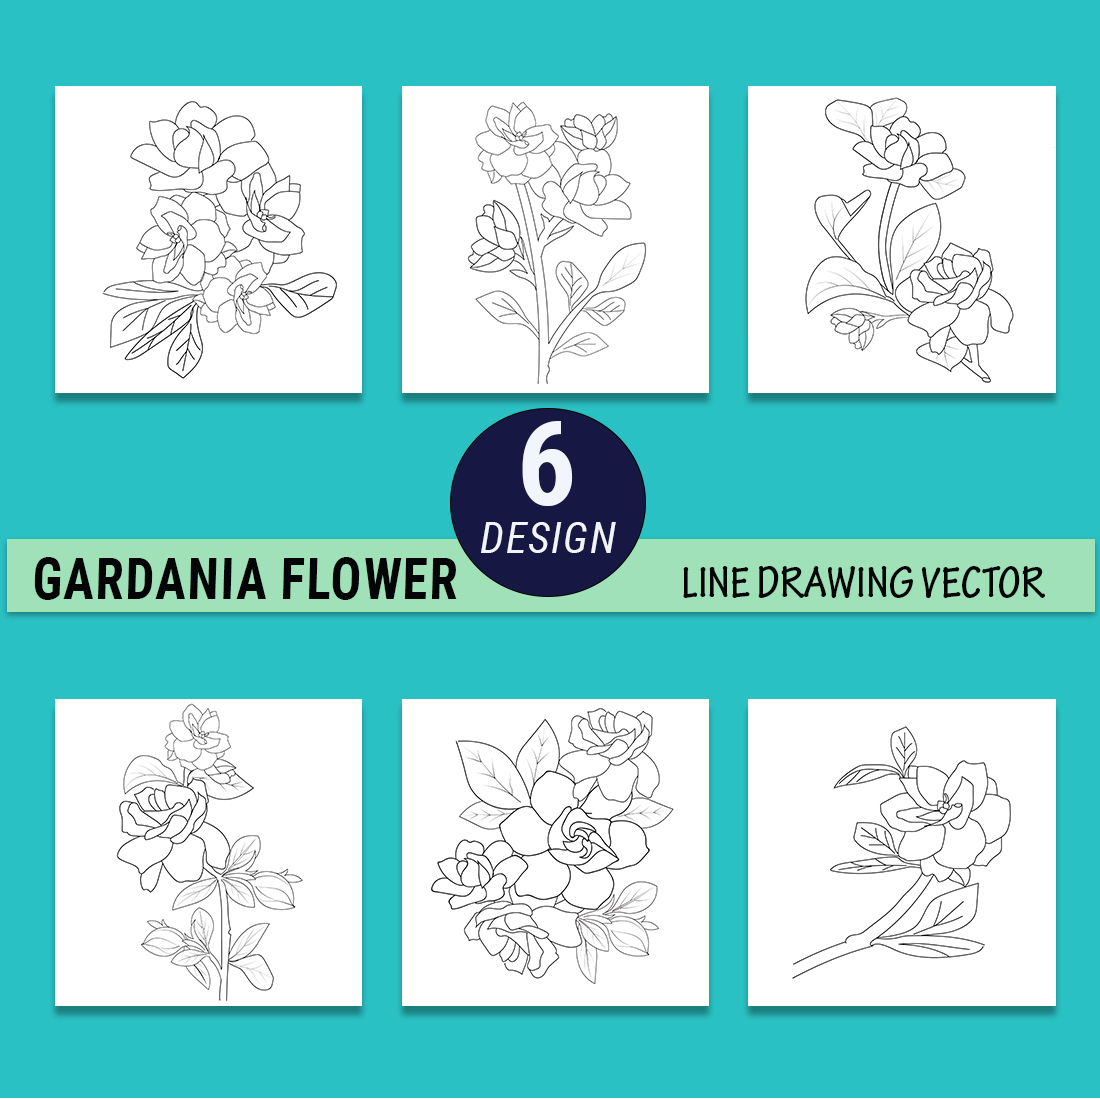 Gardenia flower drawing, gardenia magnolia coloring pages easy gardenia flower drawing, pencil gardenia flower drawing cover image.